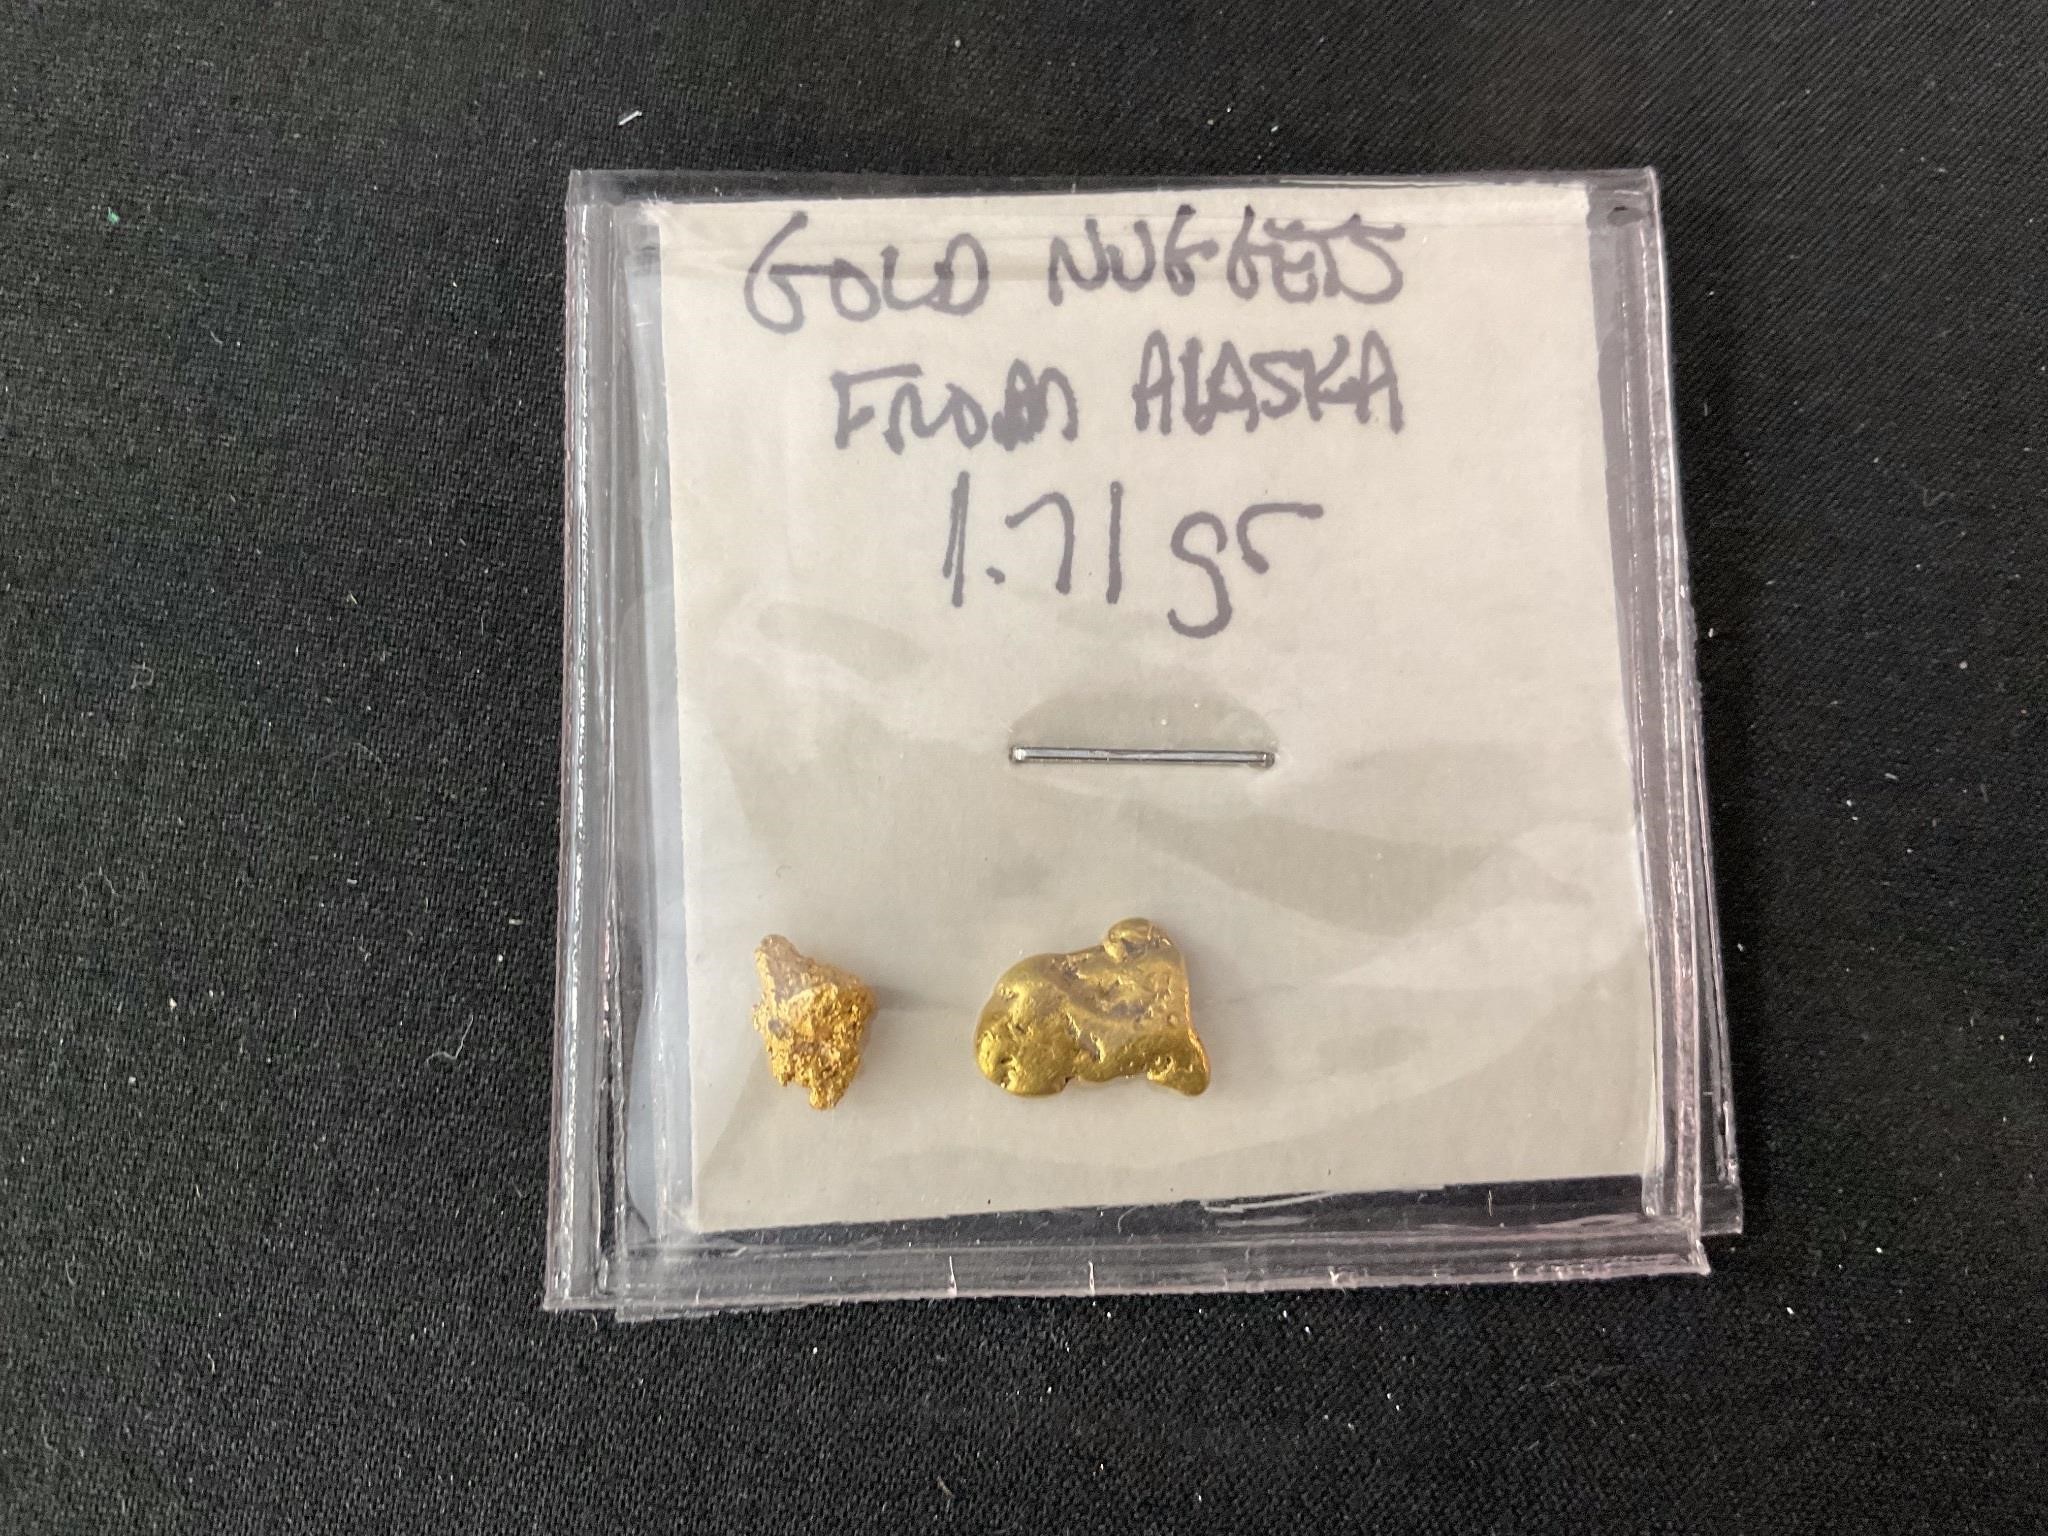 Gold Nuggets from Alaska – 1.71 gr